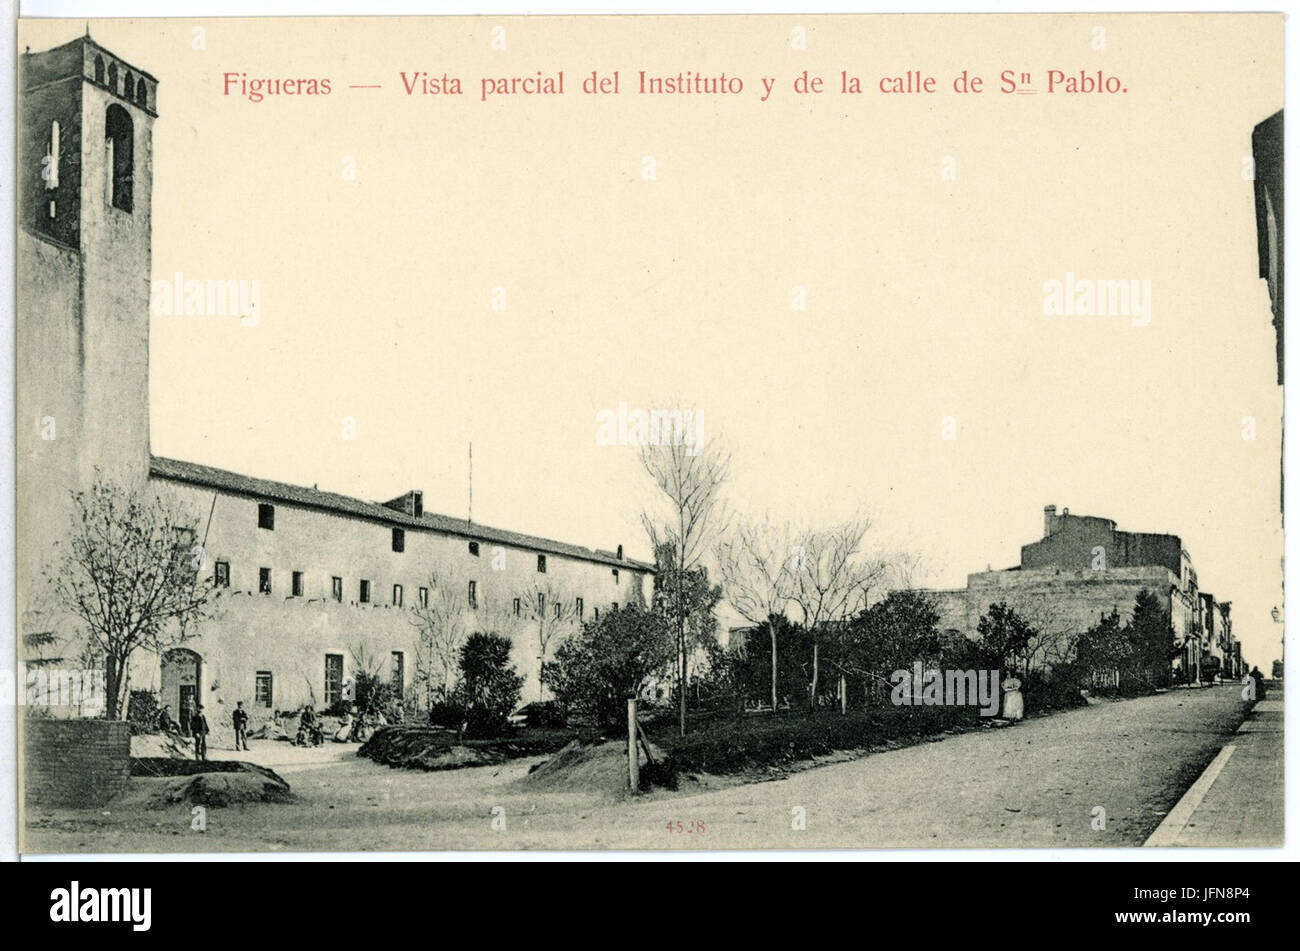 04528-Figueras-1903-Vista parcial del Instituto y de la calle de S Pablo-Brück & Sohn Kunstverlag Stock Photo